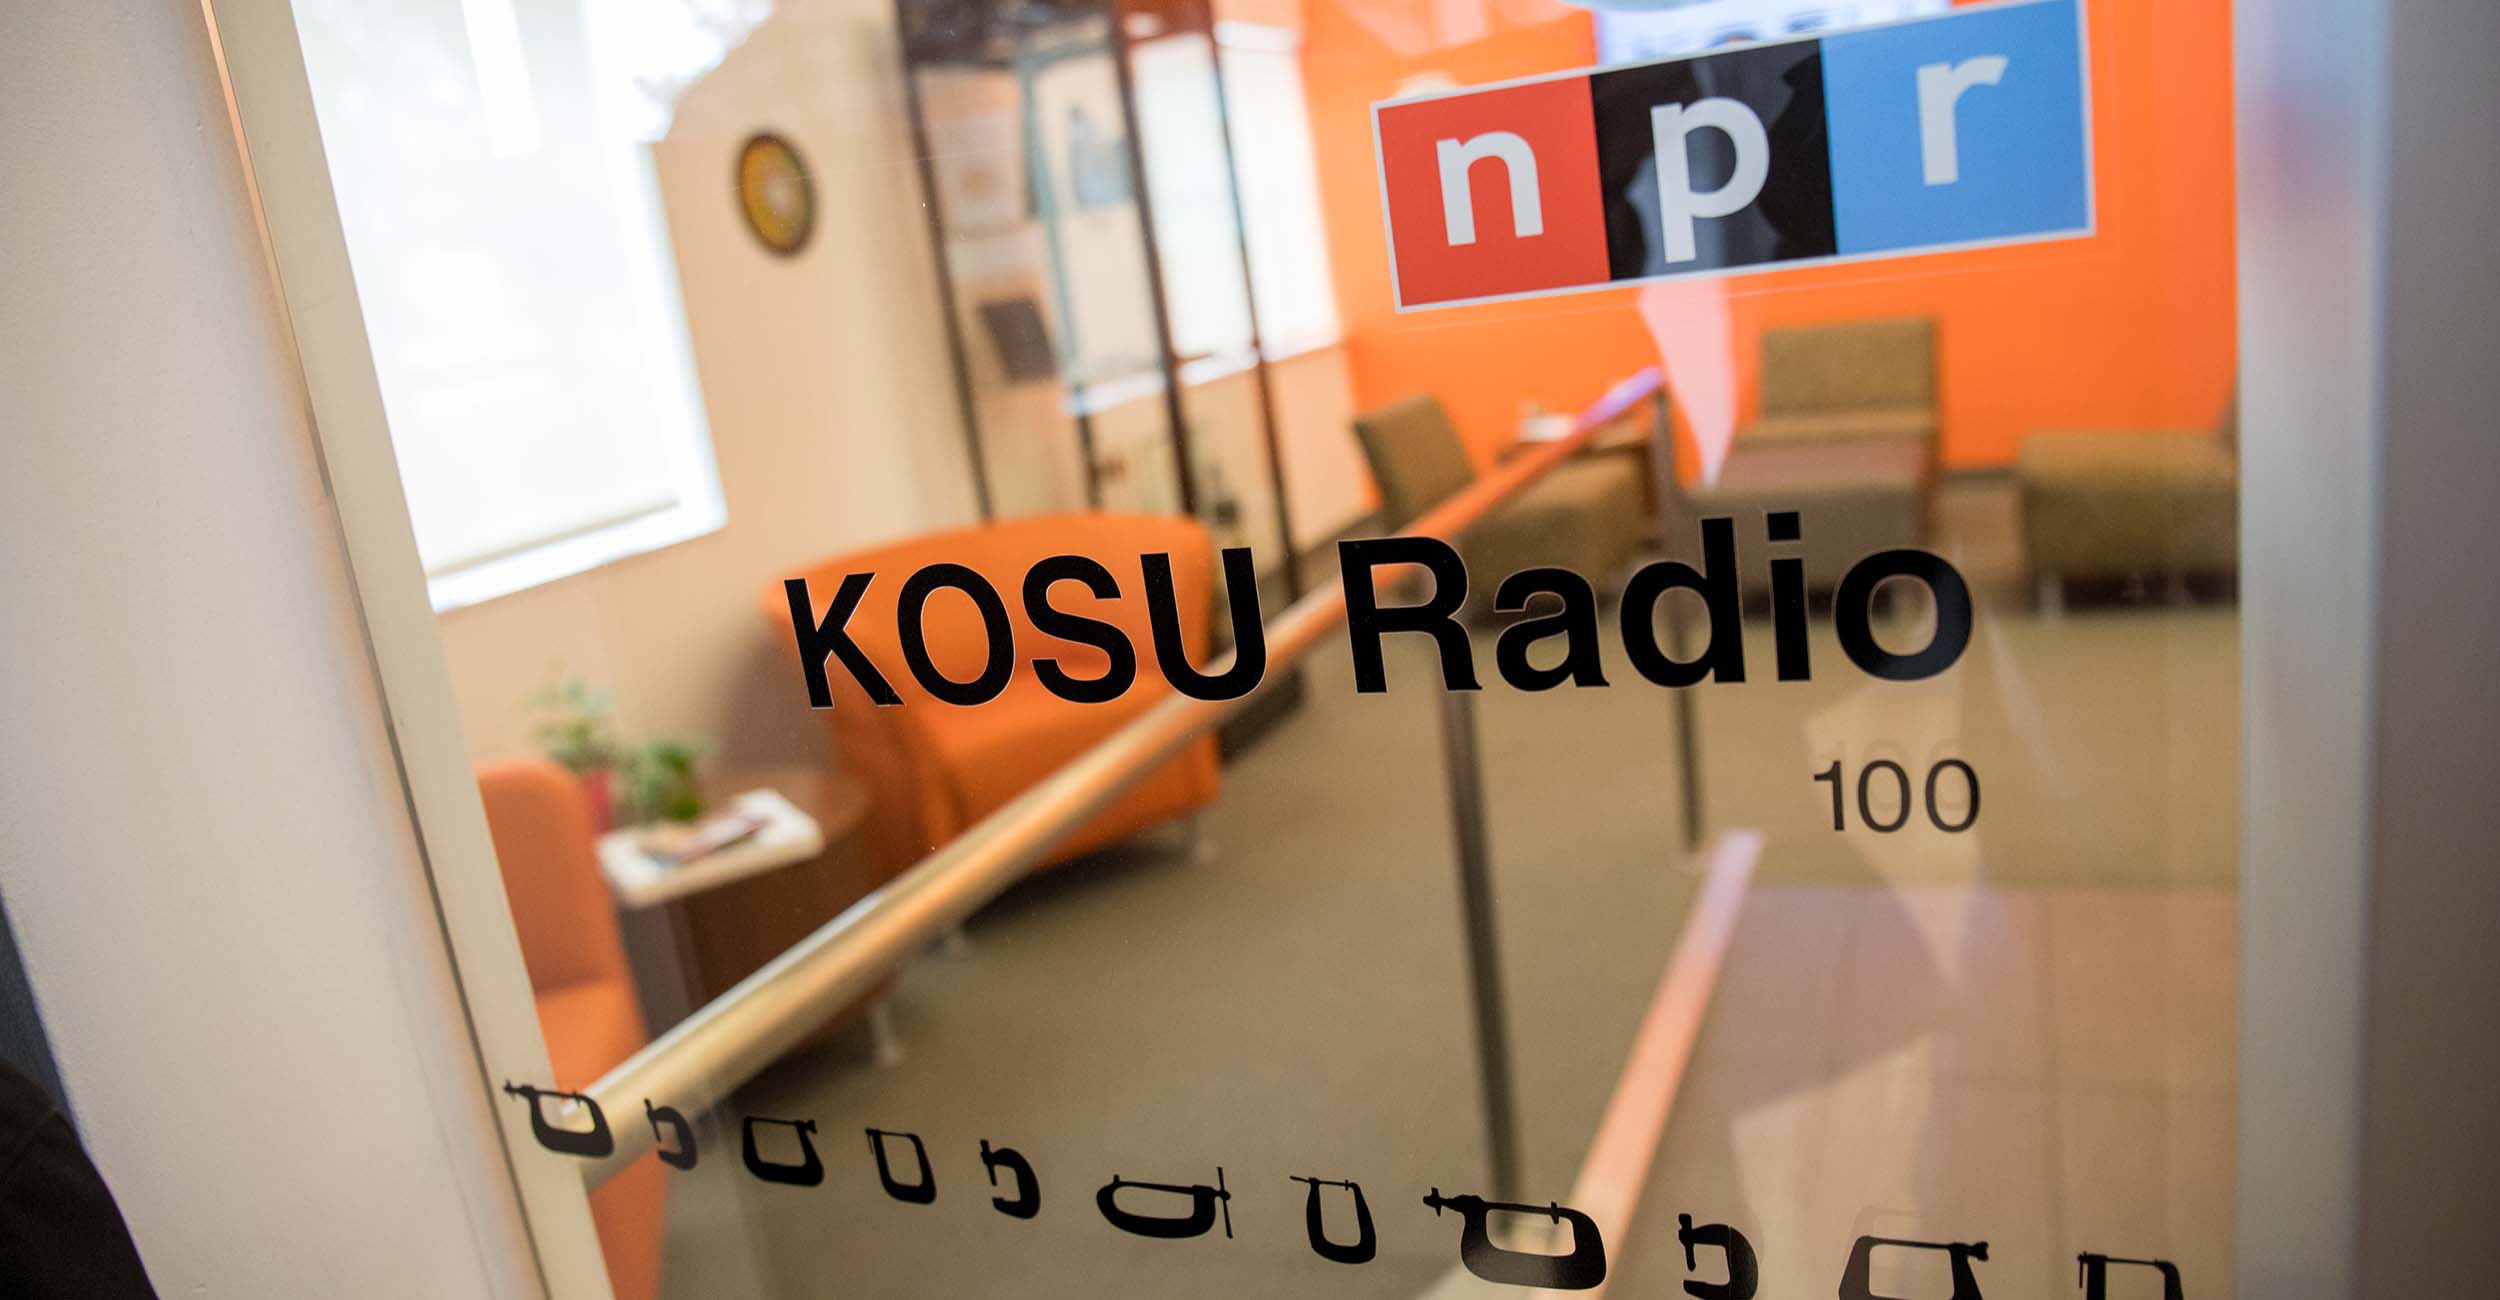 KOSU Studios at the campus of Oklahoma State University.